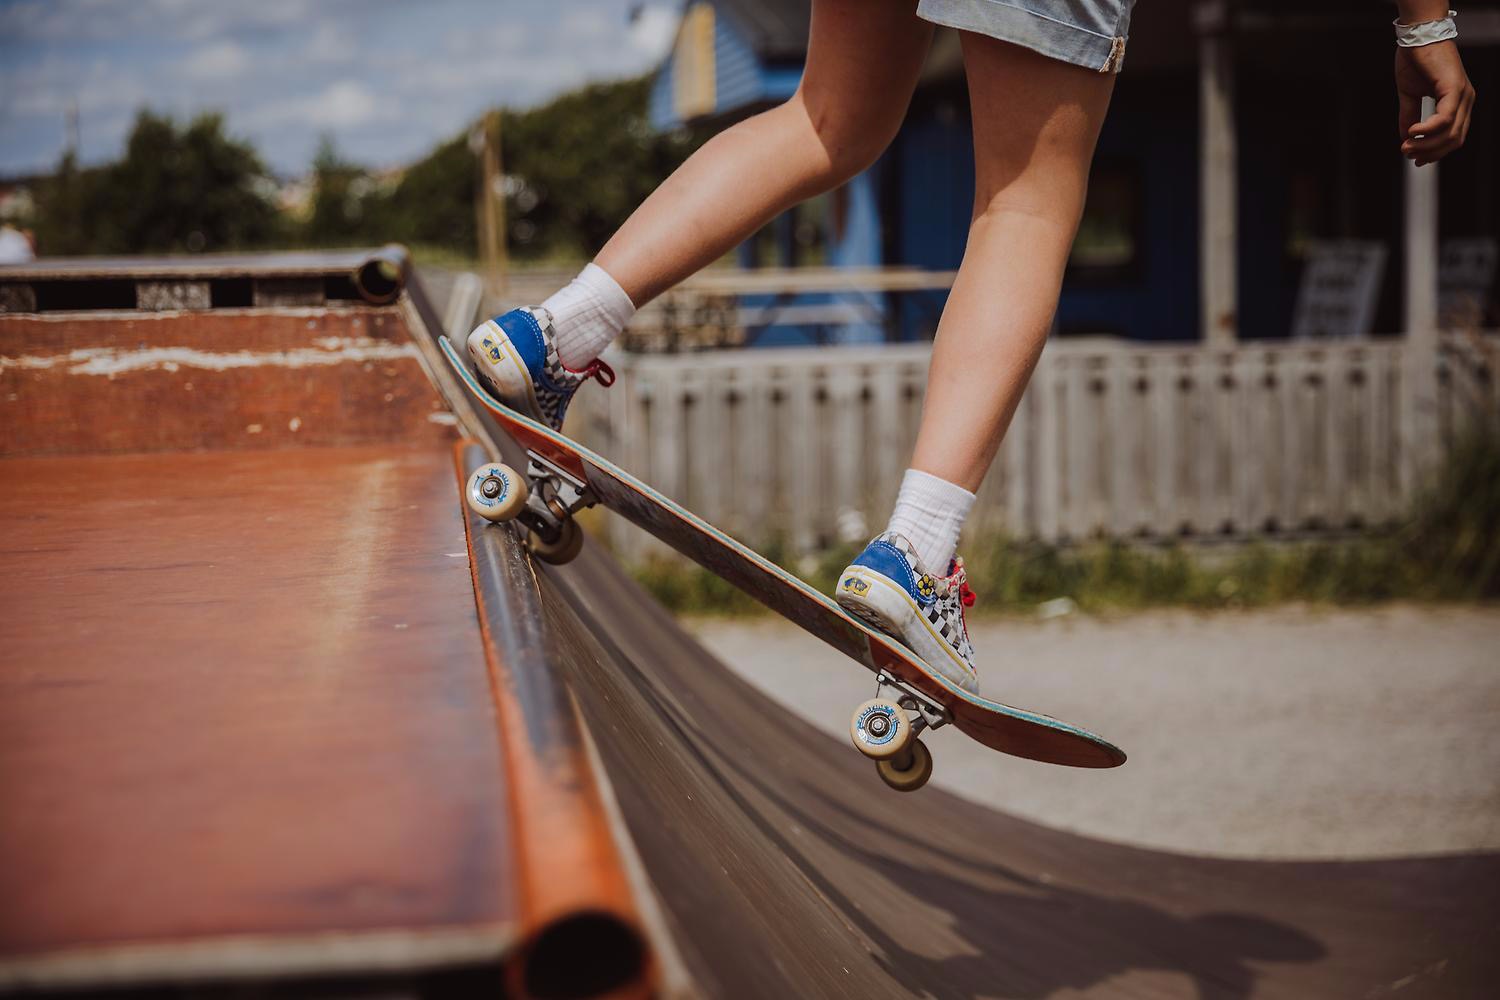 Skateboard i ramp.